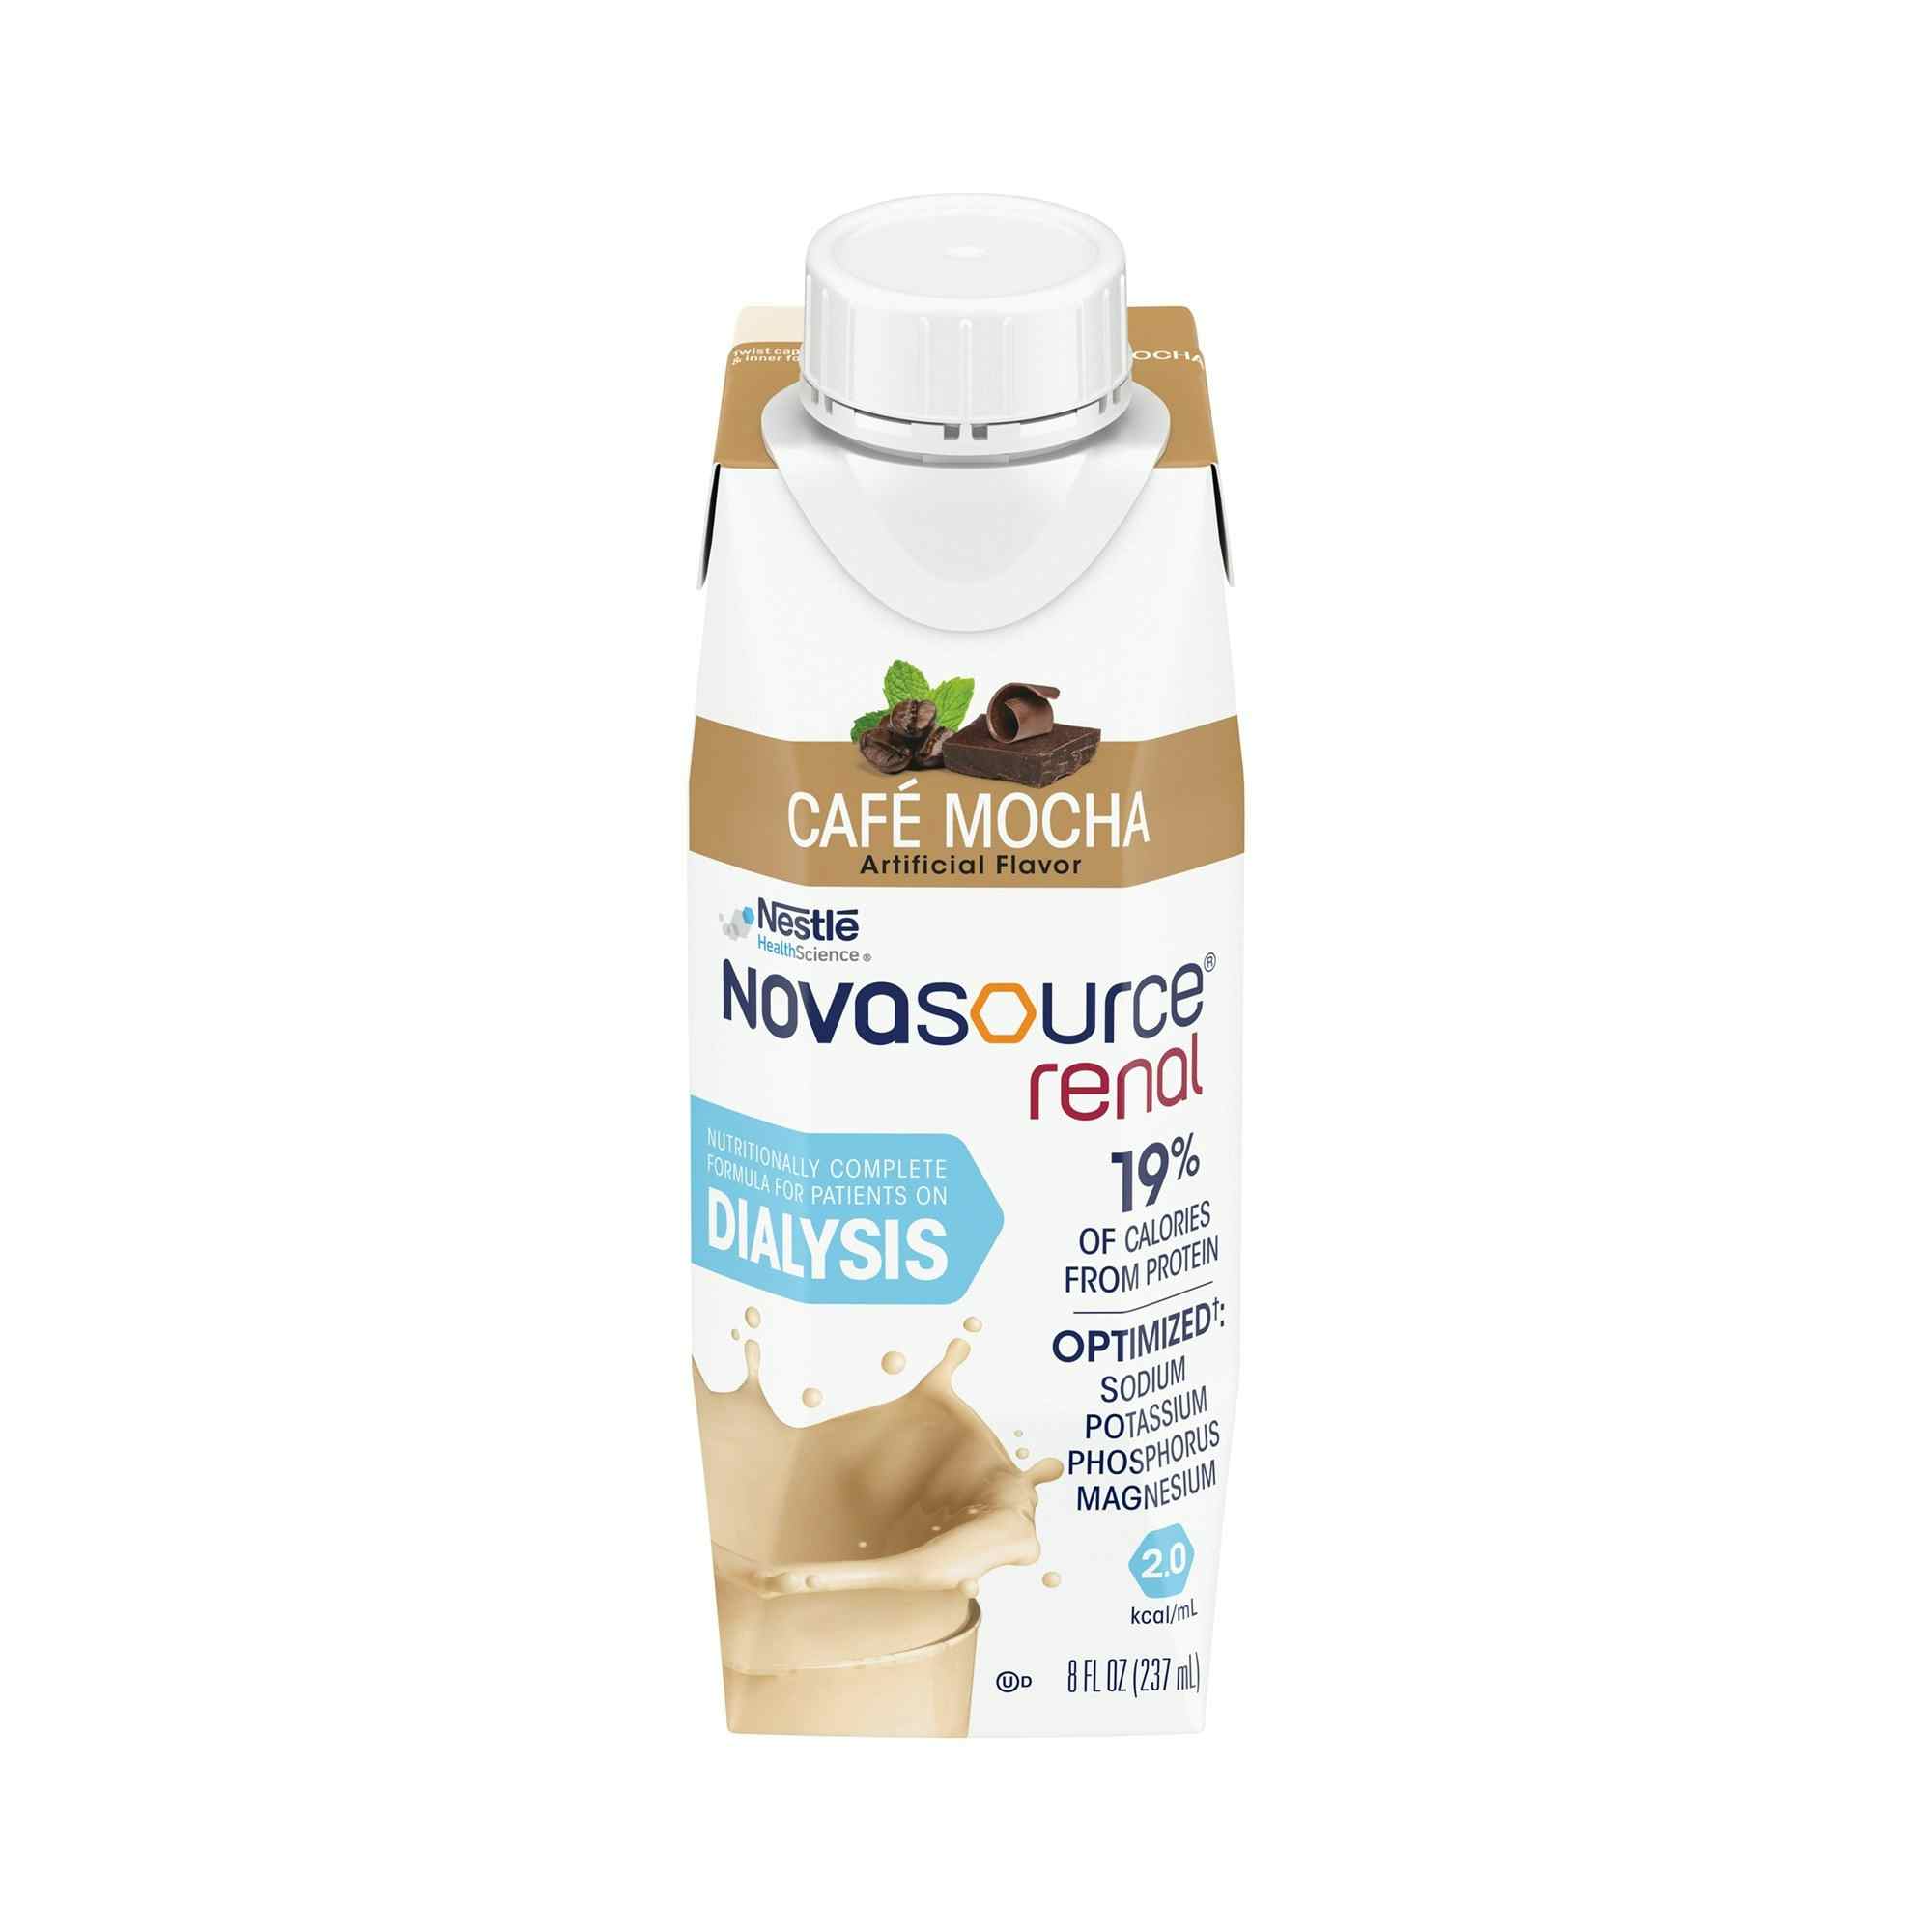 Novasource Renal Oral Supplement, Mocha Flavor, 8 oz., 00043900185446, Case of 24